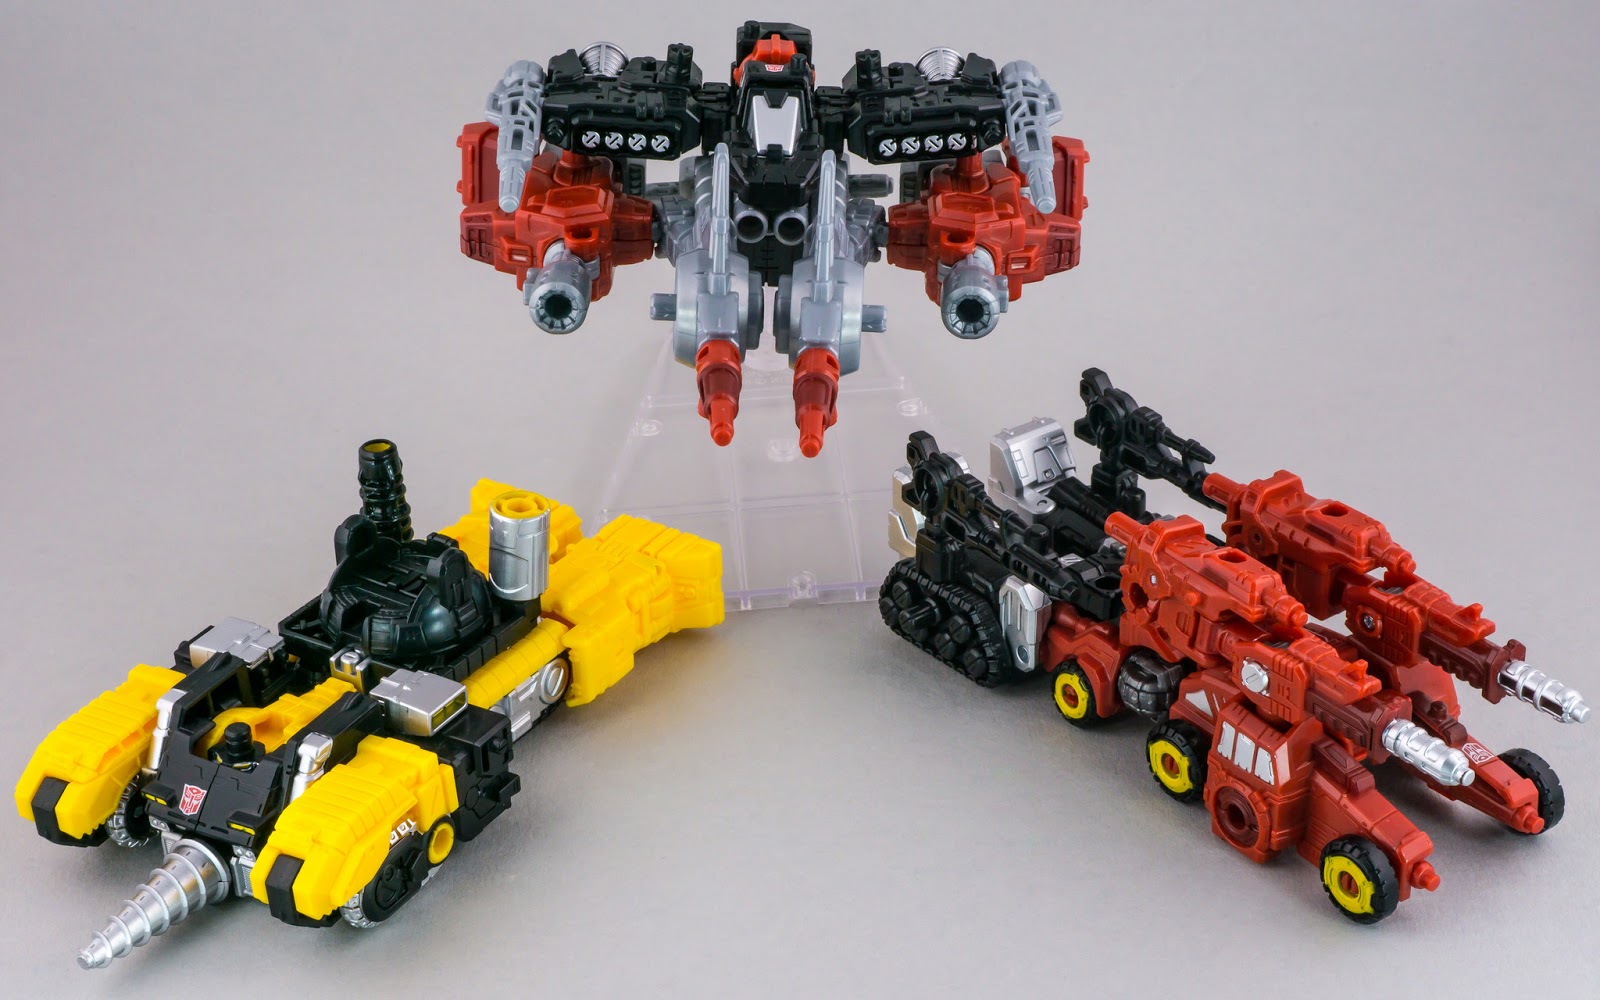 Transformers Siege Powerdashers vehicle modes